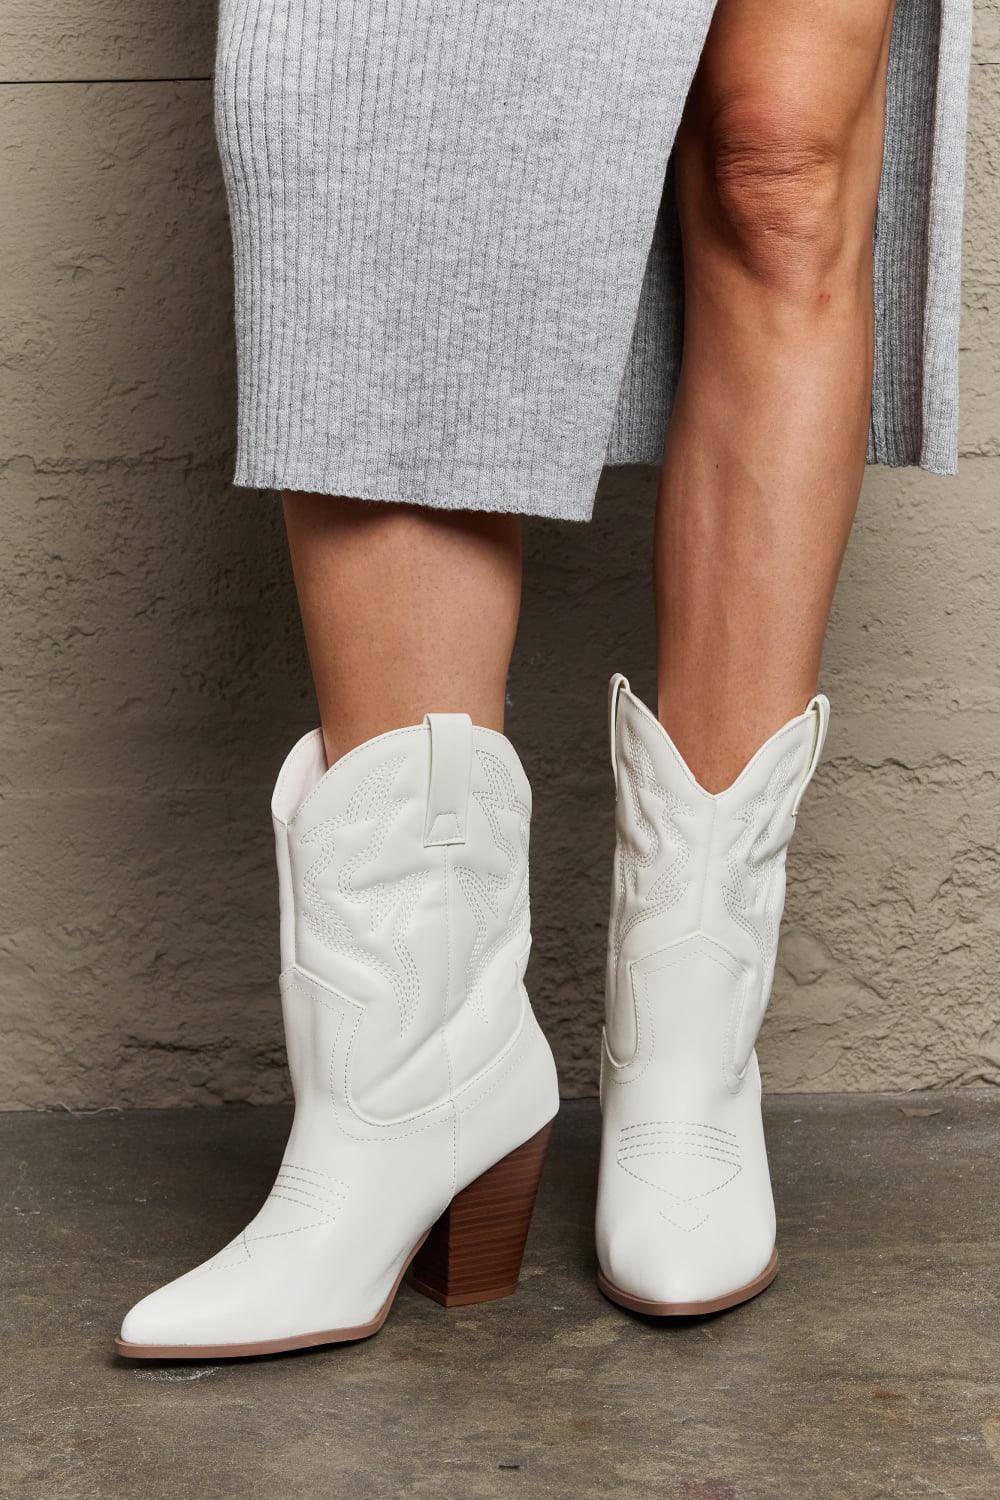 Legend Footwear Mid Block Heels White Cowboy Boots - MXSTUDIO.COM